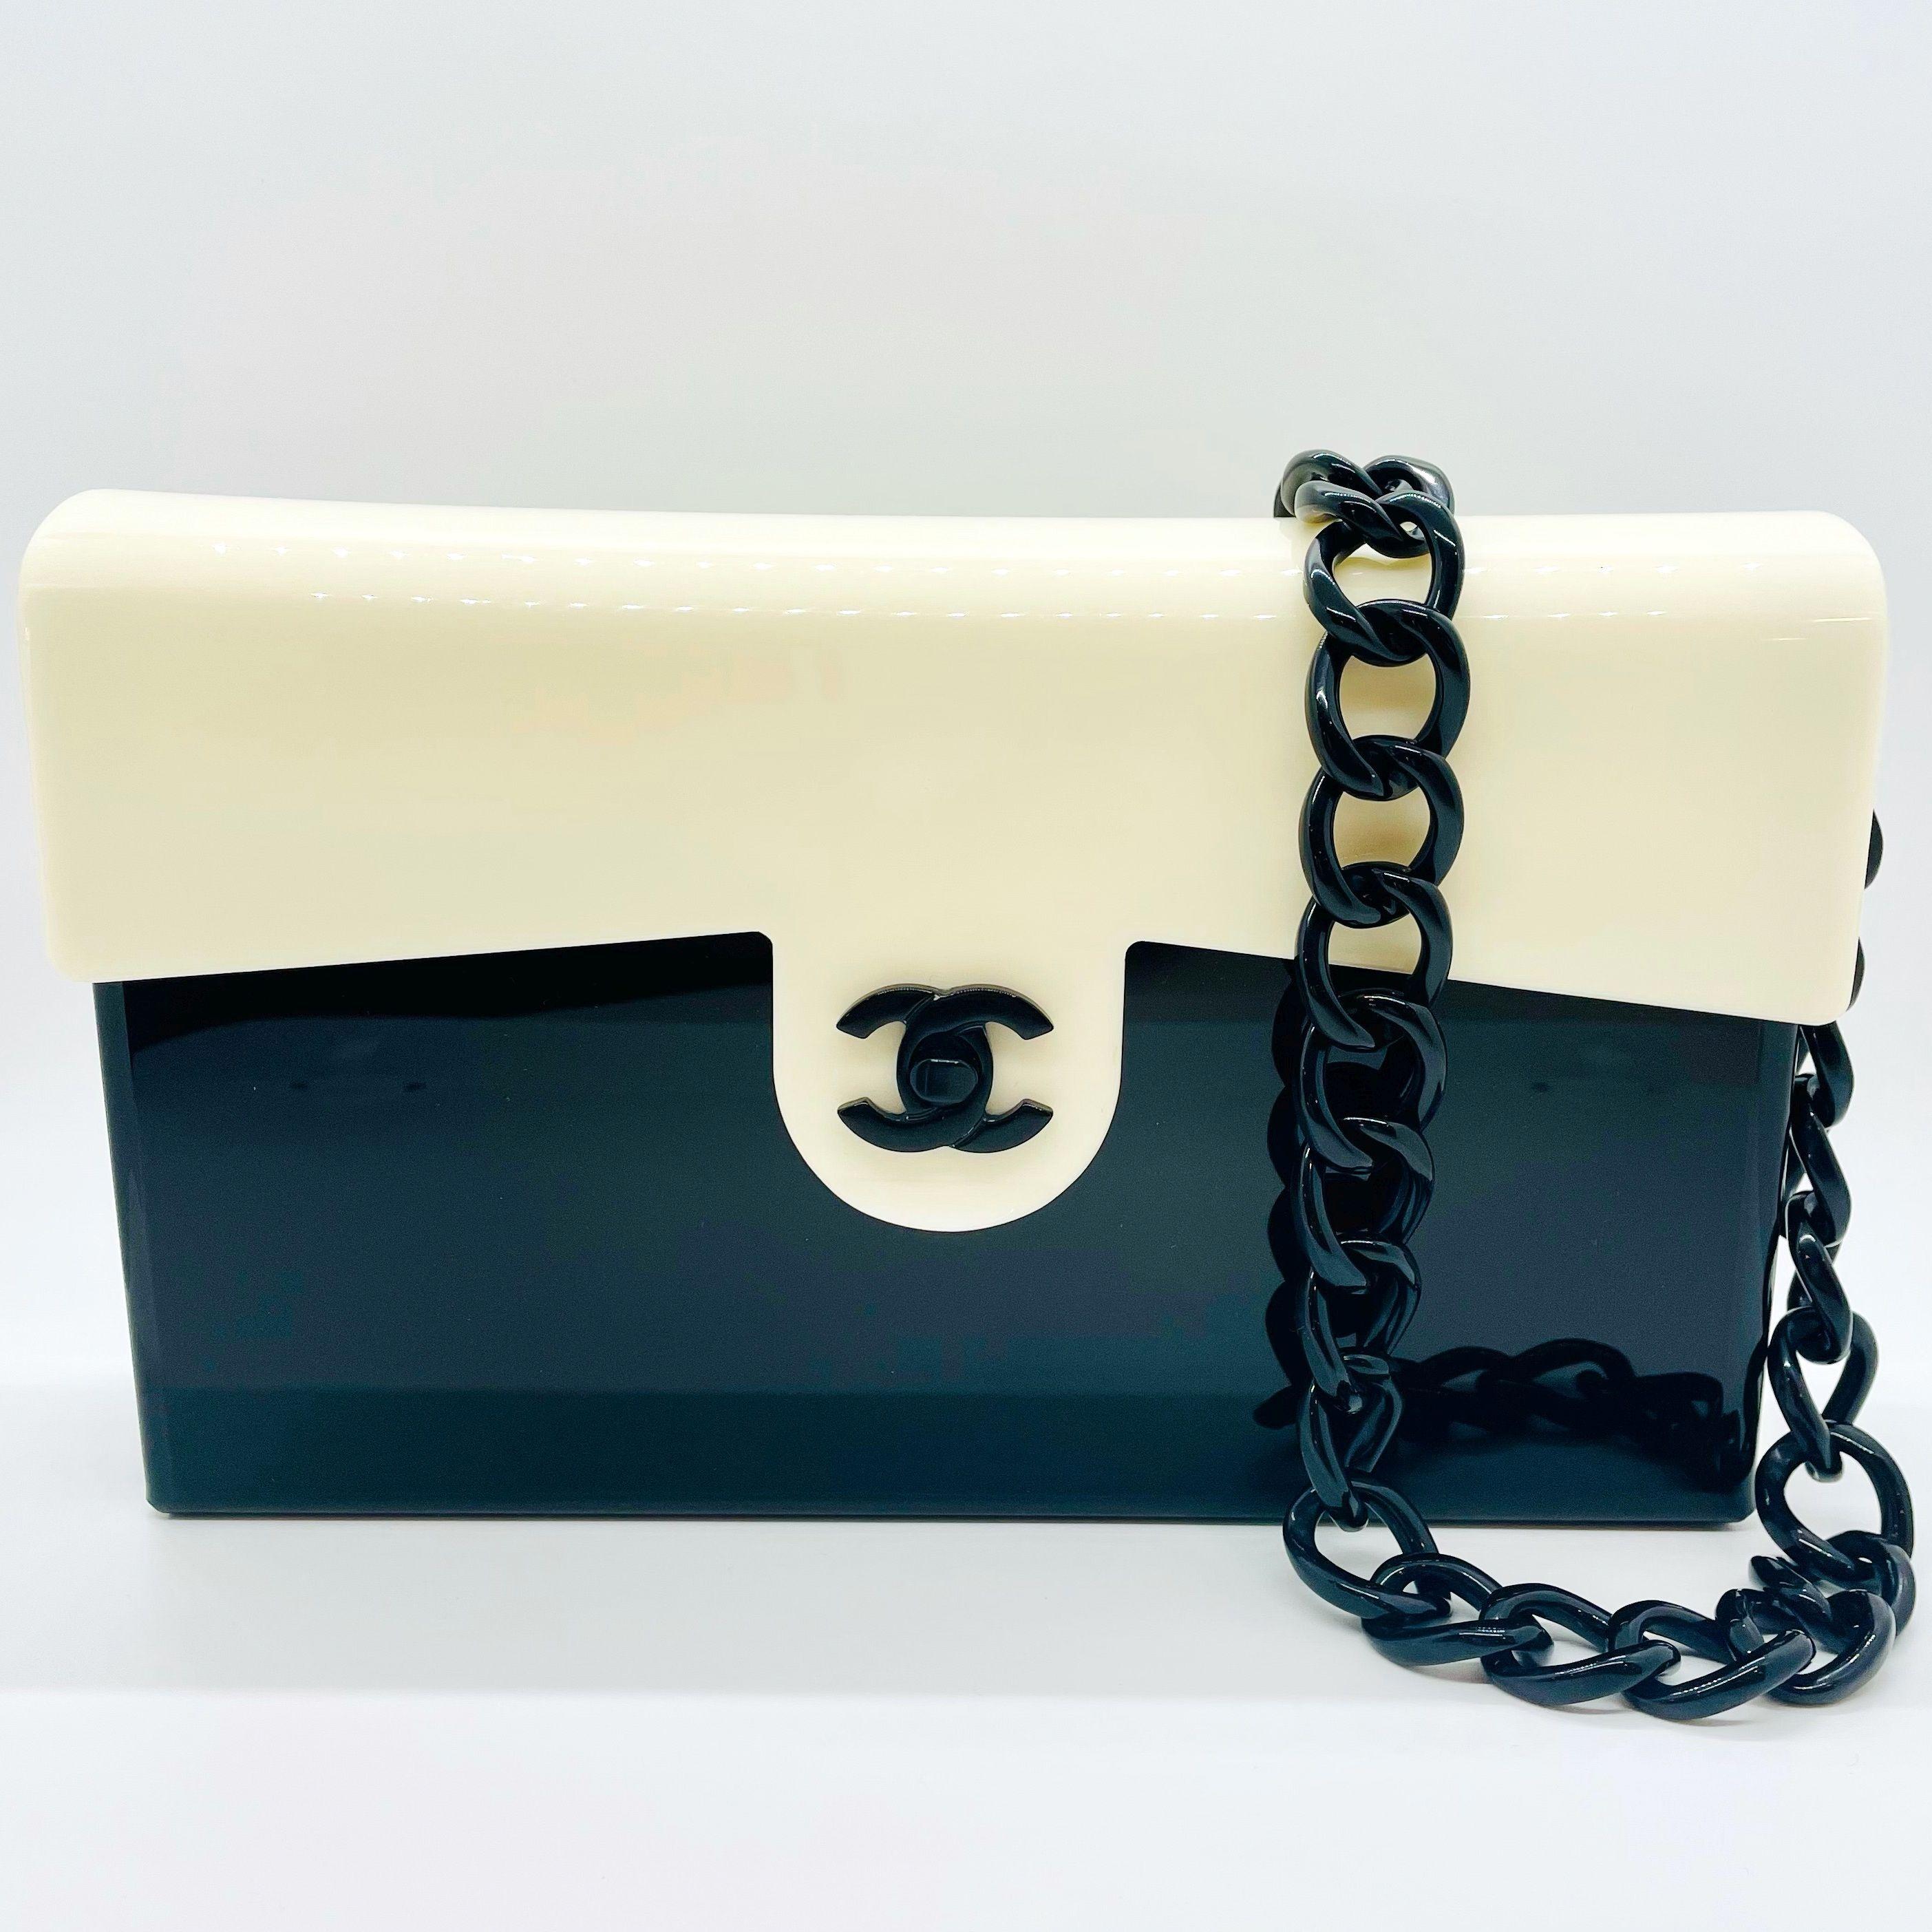 Authentic Chanel Medium Flap Bag Black And Ivory Plexi Acrylic Plastic